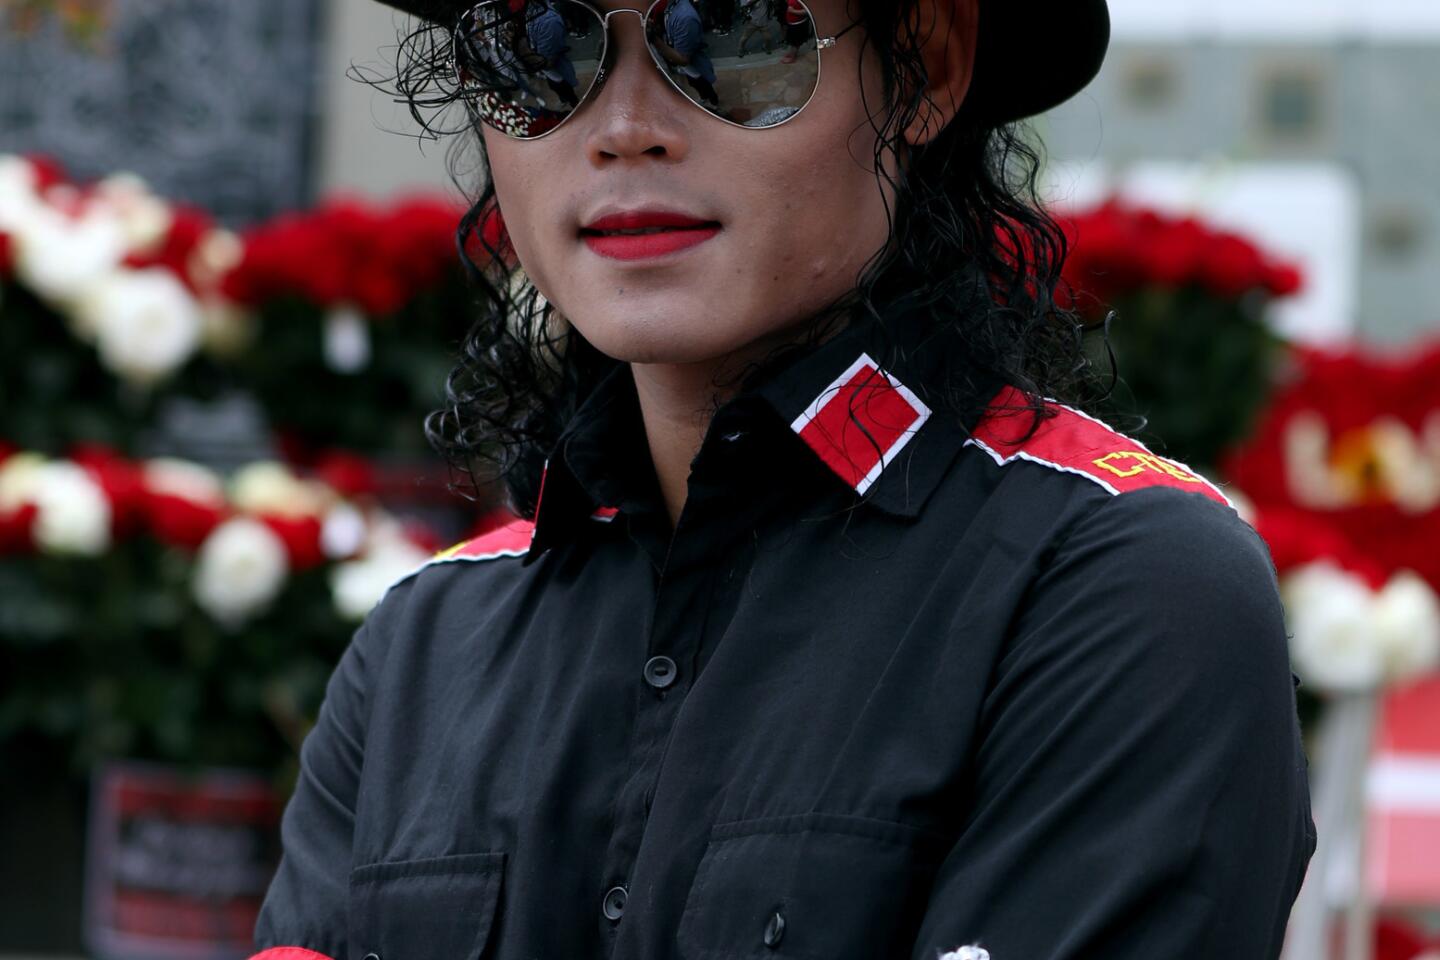 Michael Jackson faithful hold colorful memorial despite latest